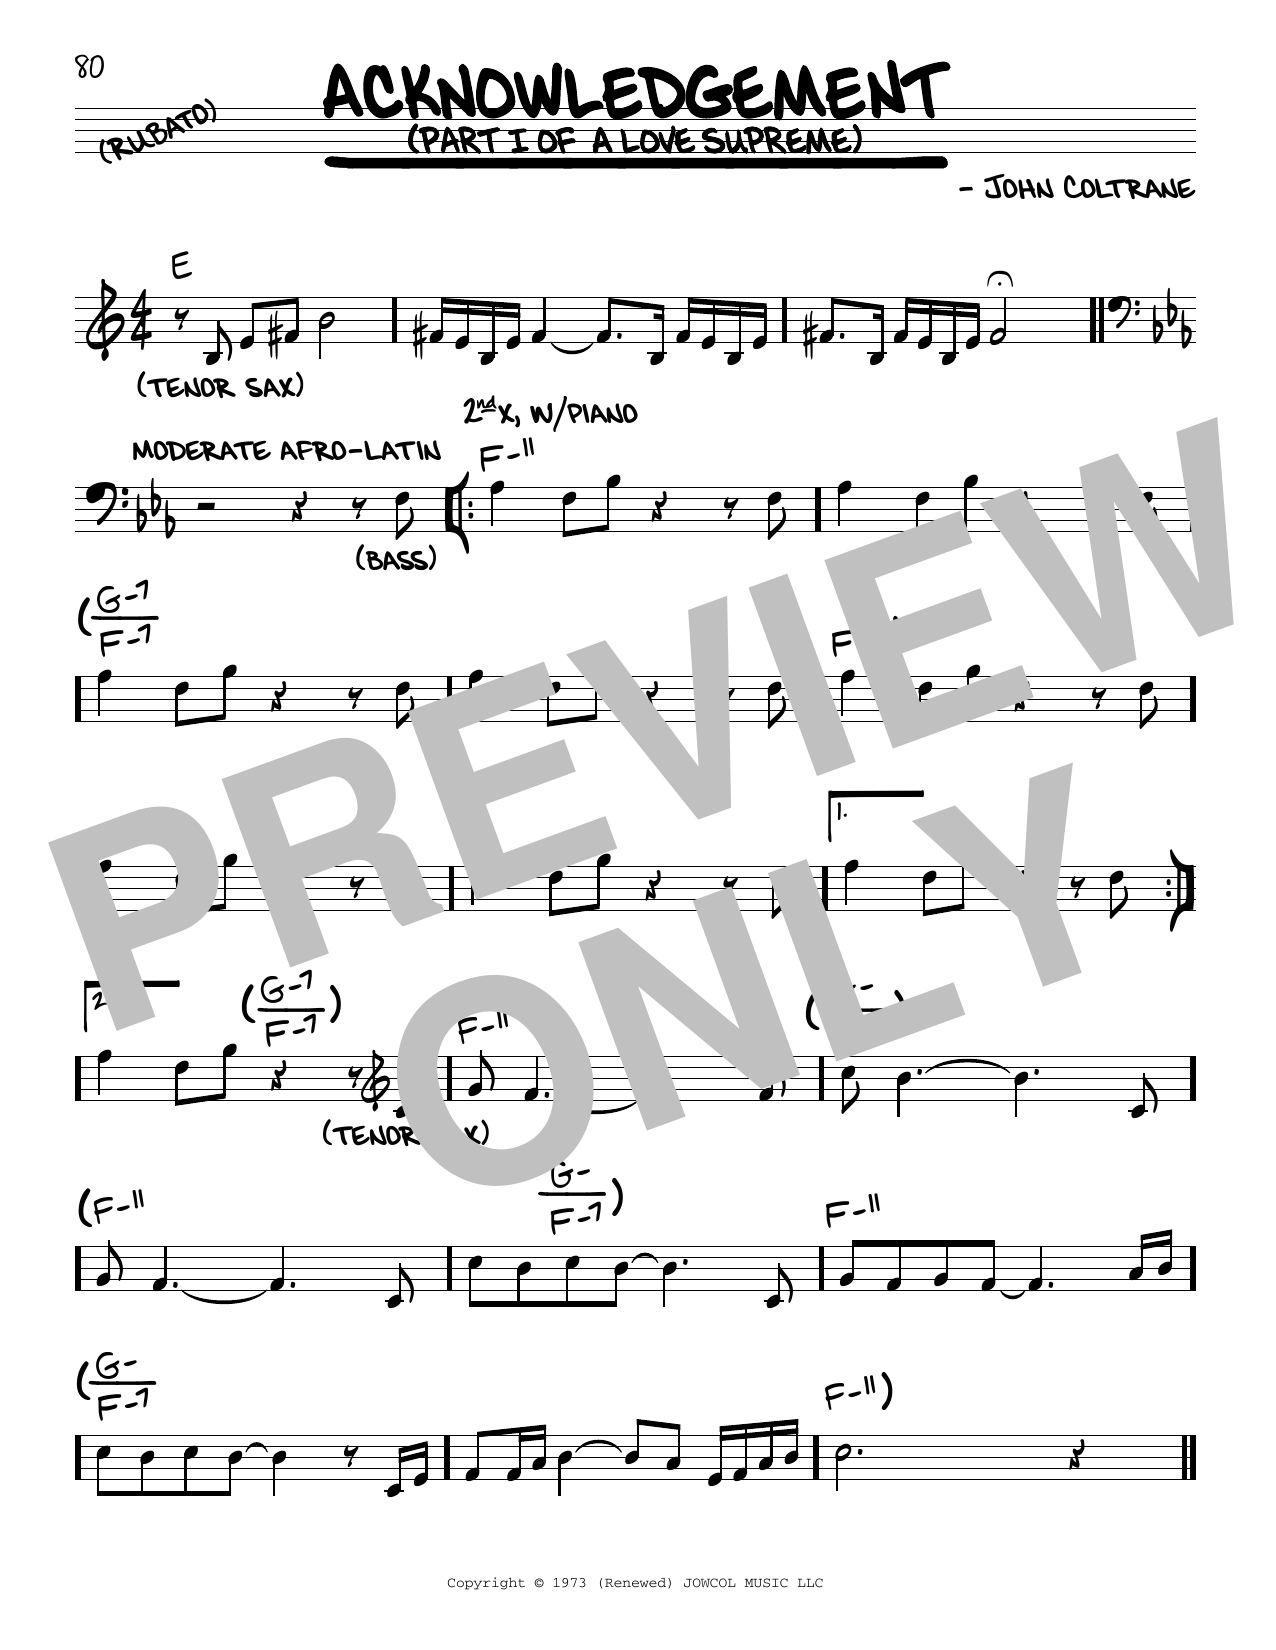 Download John Coltrane Acknowledgement Sheet Music